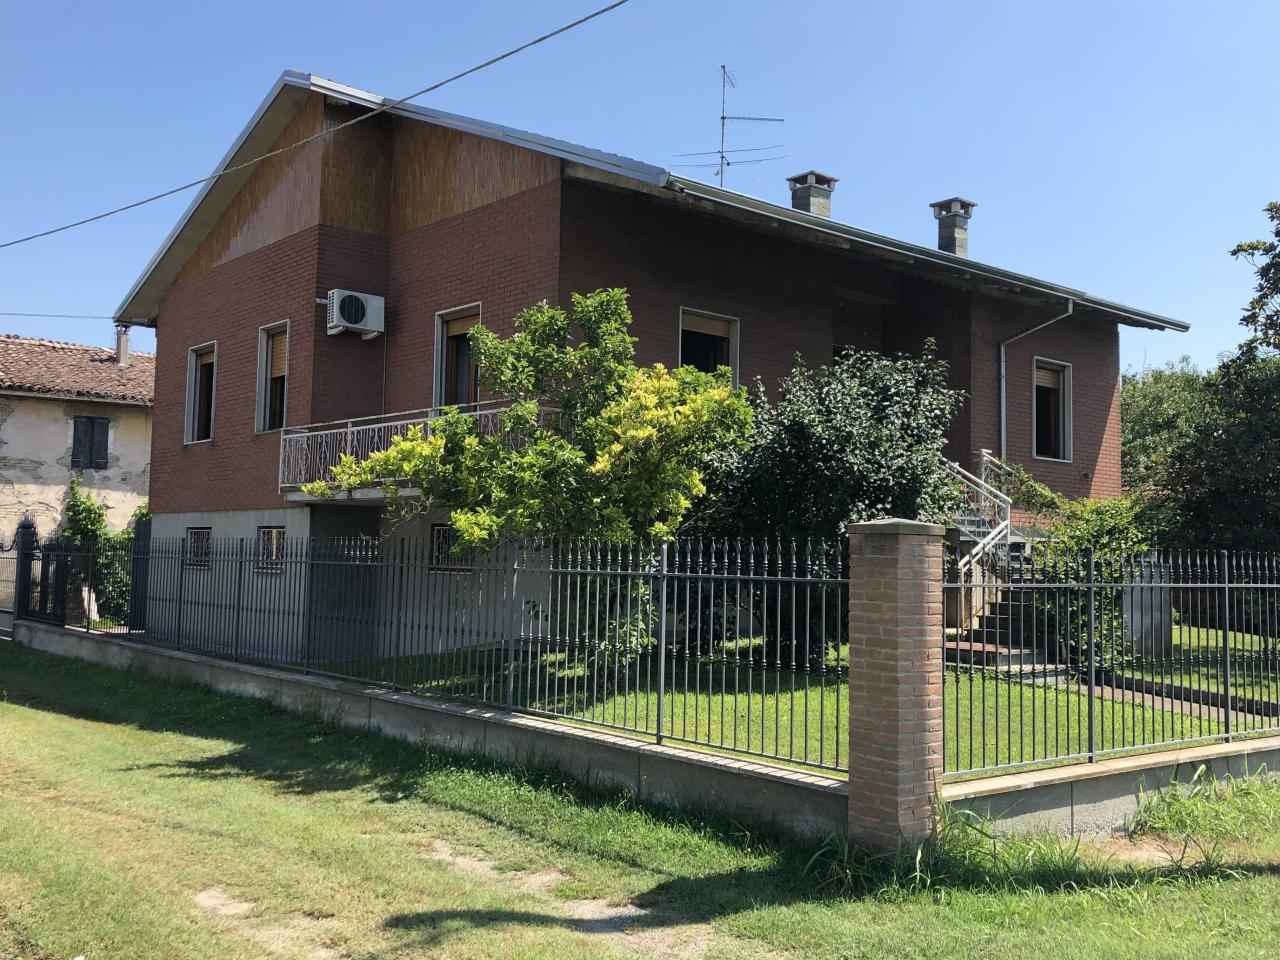 Casa indipendente in vendita a Roccabianca